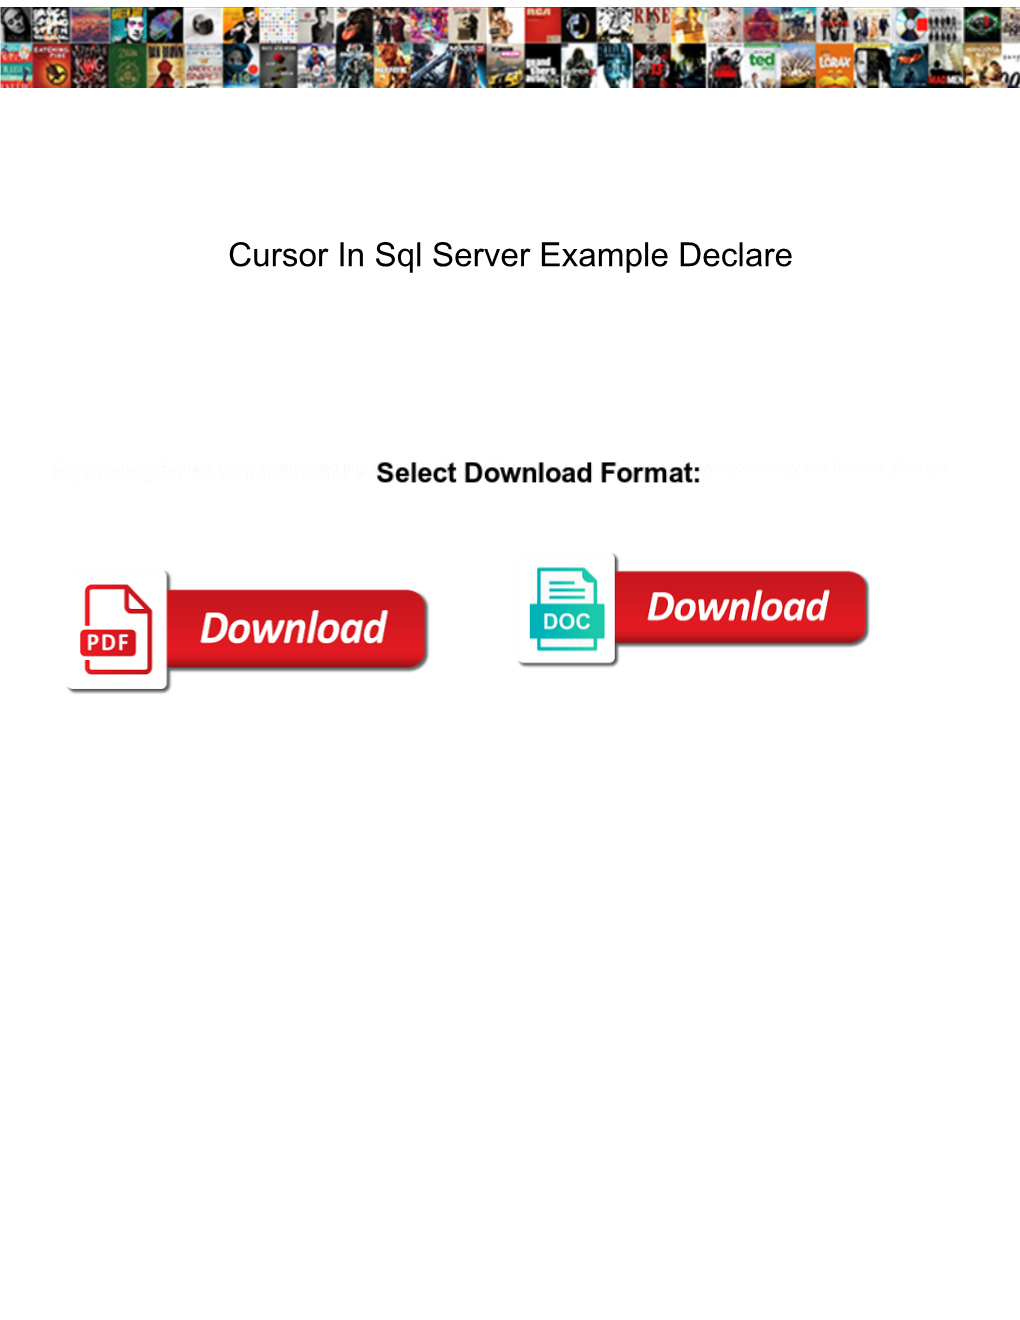 Cursor in Sql Server Example Declare